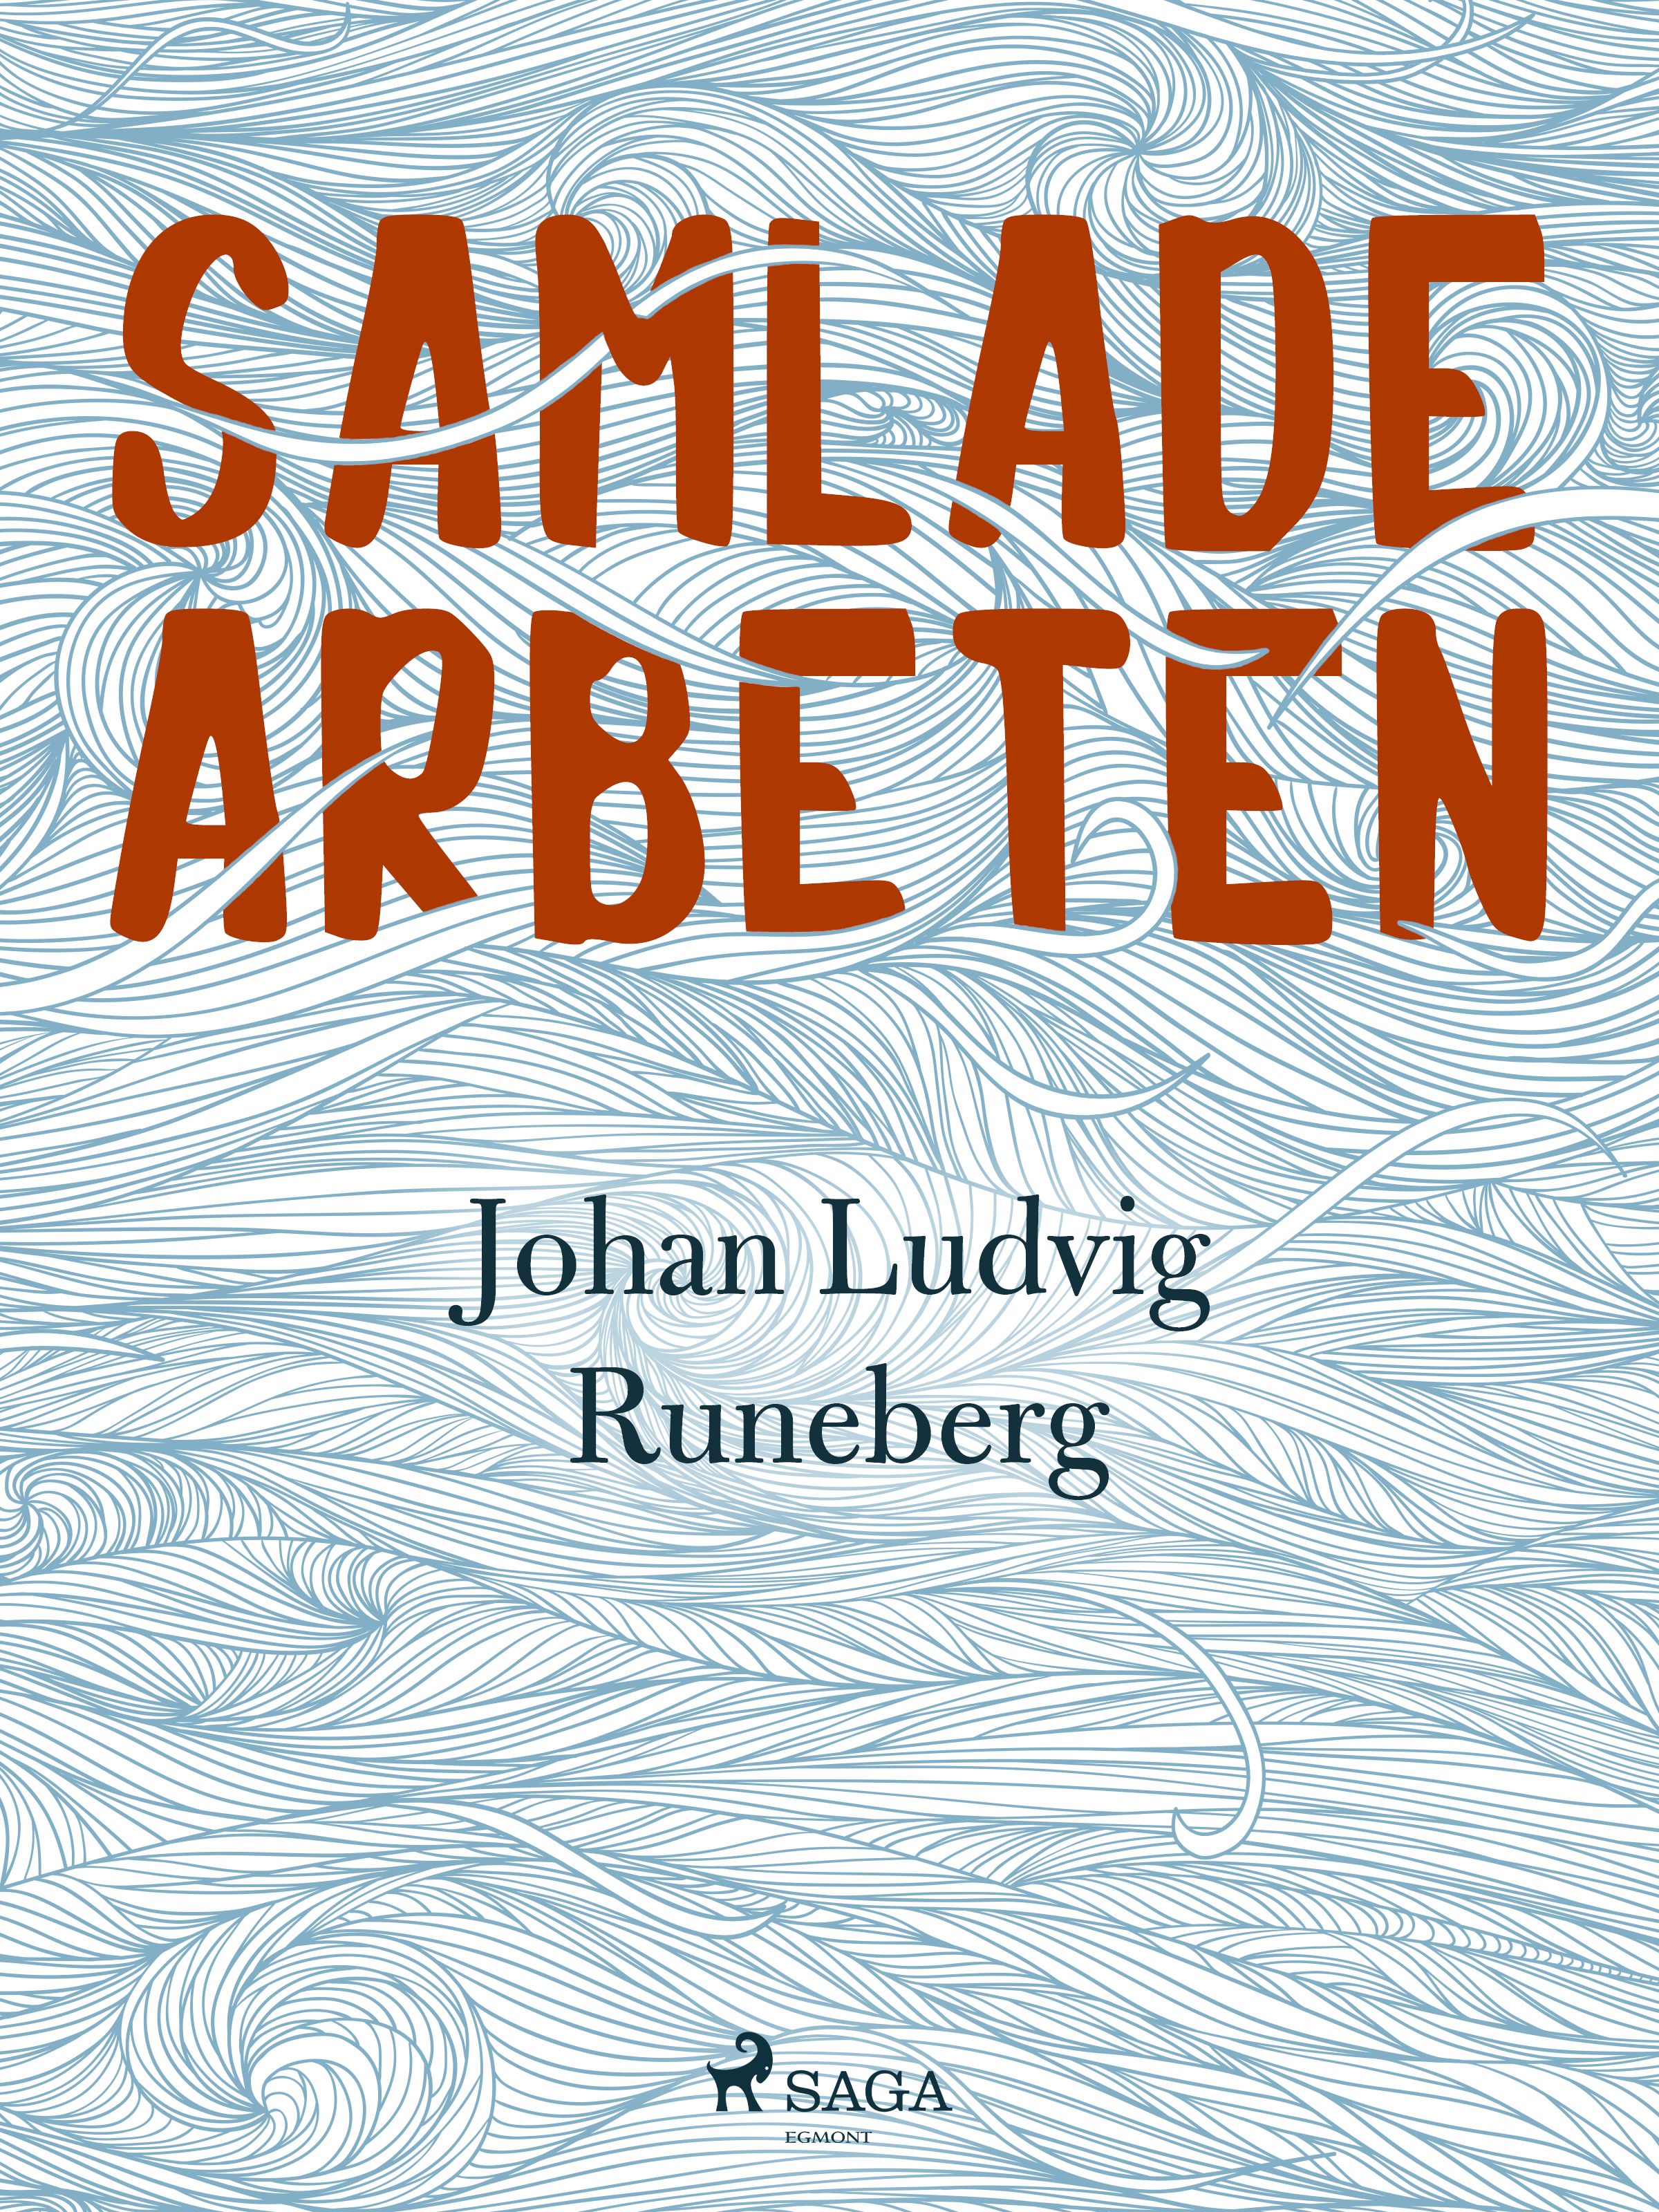 Samlade Arbeten, e-bog af Johan Ludvig Runeberg